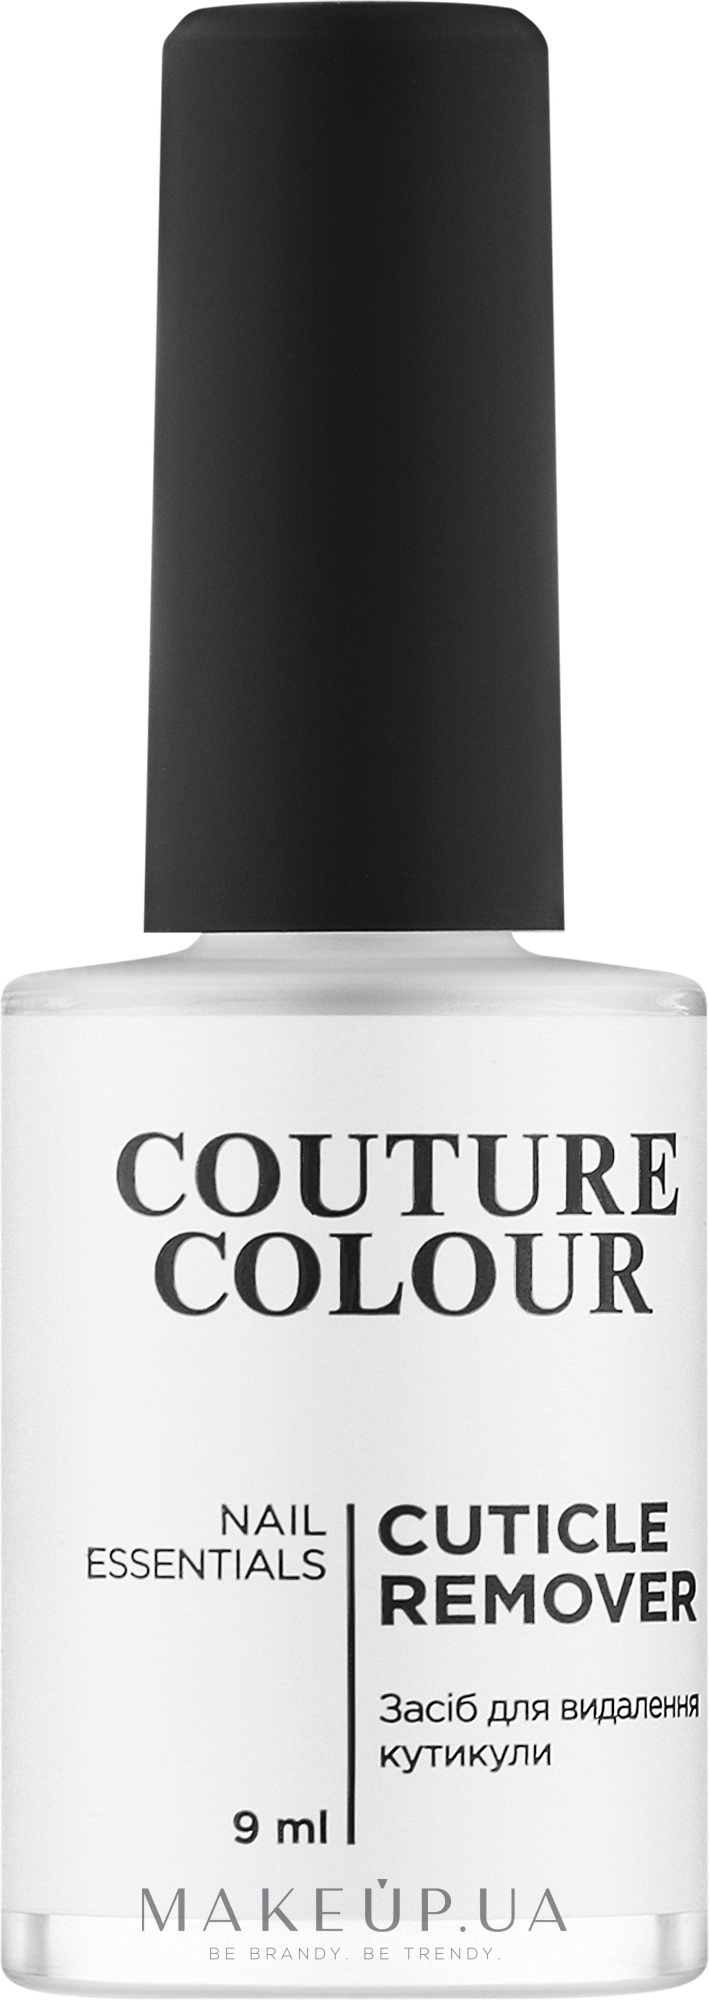 Средство для удаления кутикулы - Couture Colour Cuticle Remover — фото 9ml